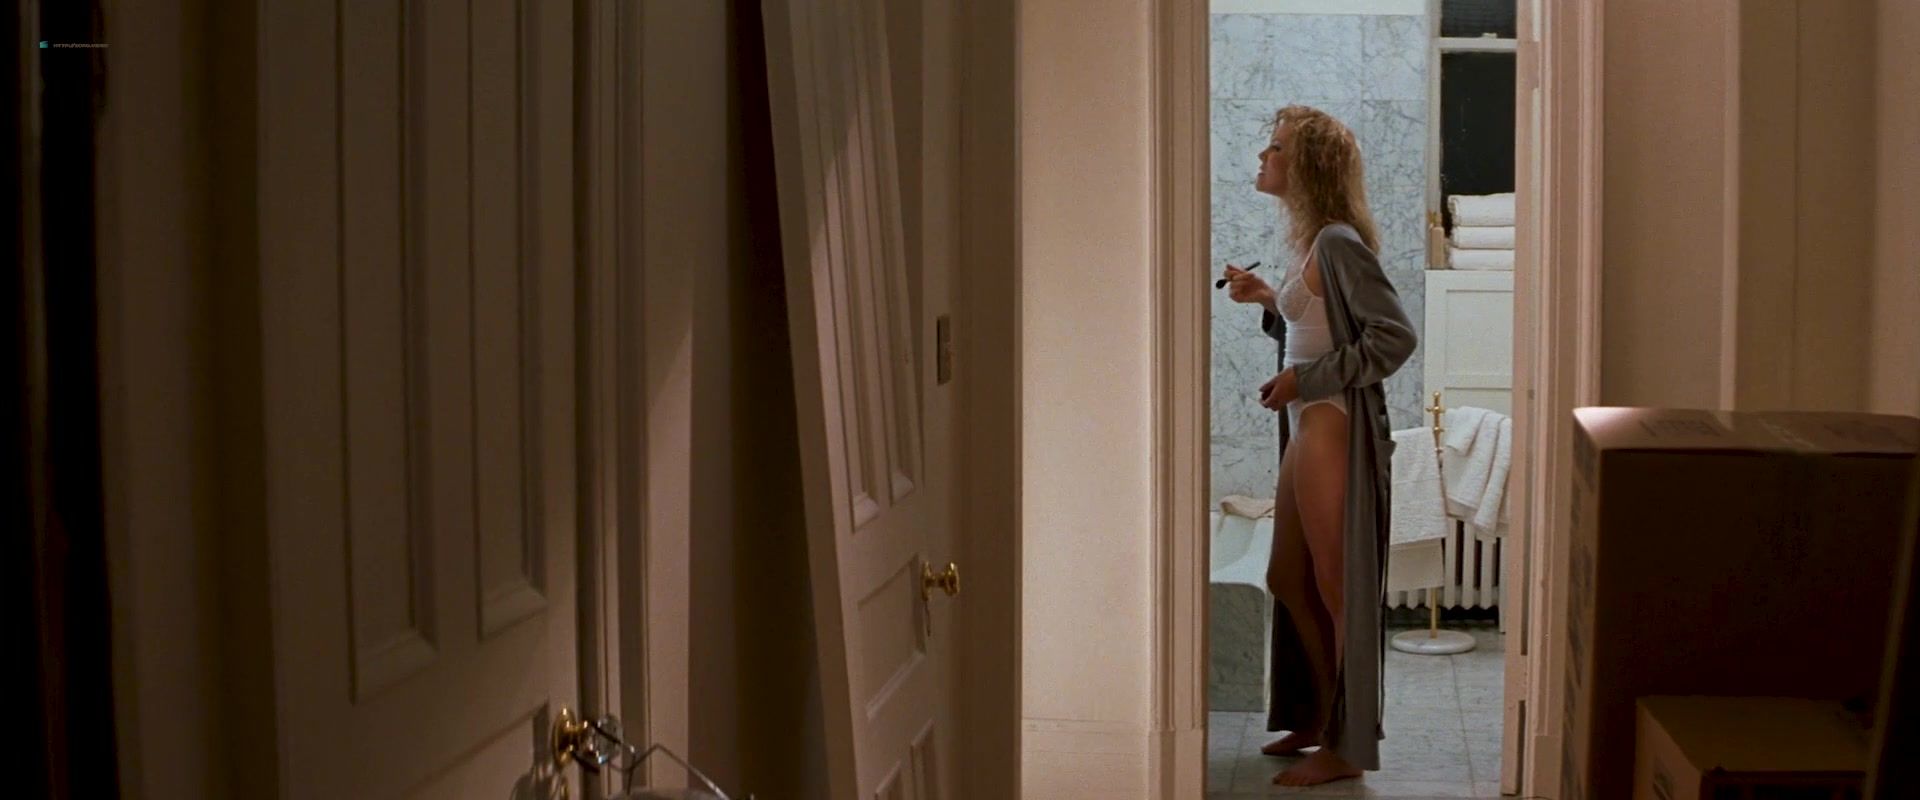 HardDrive Nude Charlize Theron - THE DEVIL'S ADVOCATE Celebrity Sex Scene - 2